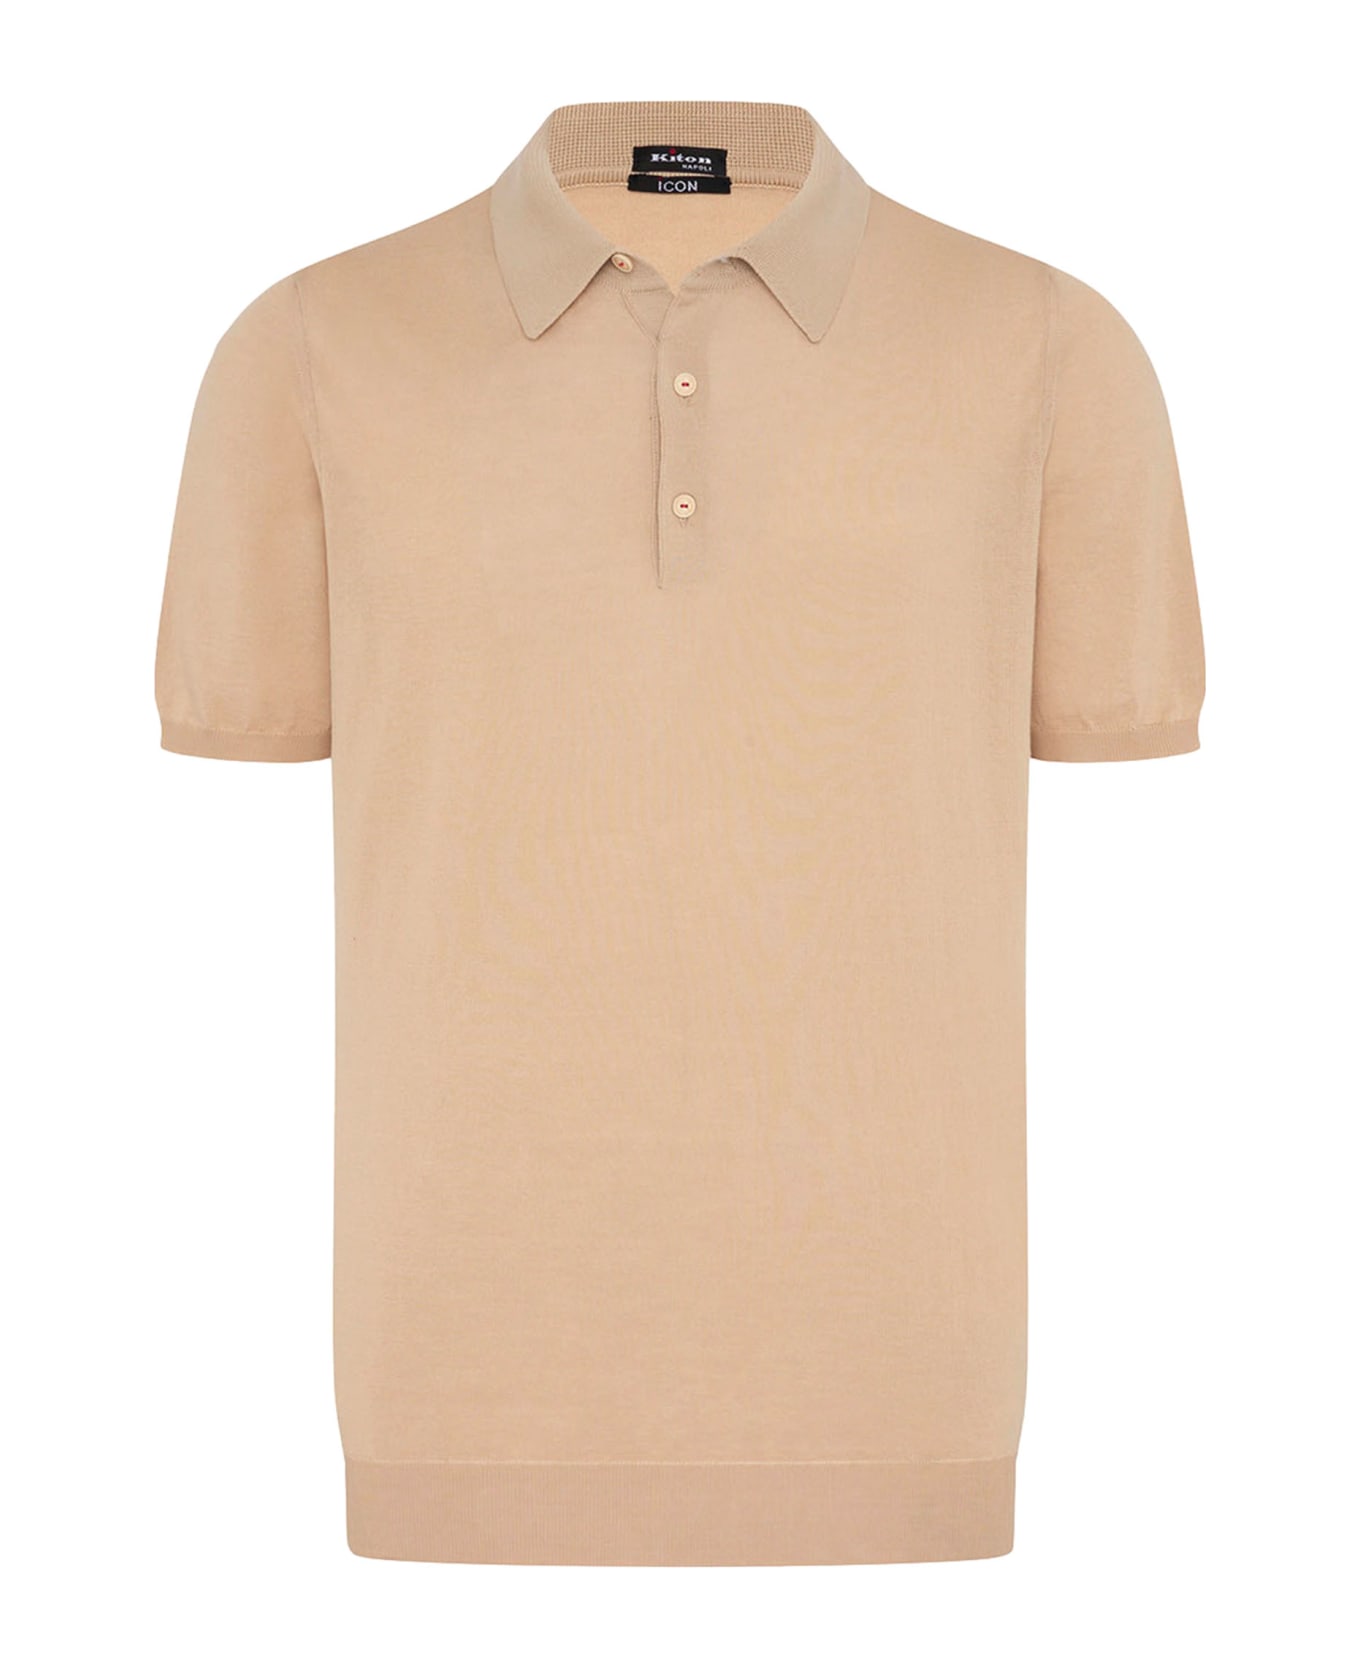 Kiton Jersey Poloshirt Cotton - NATURAL BEIGE